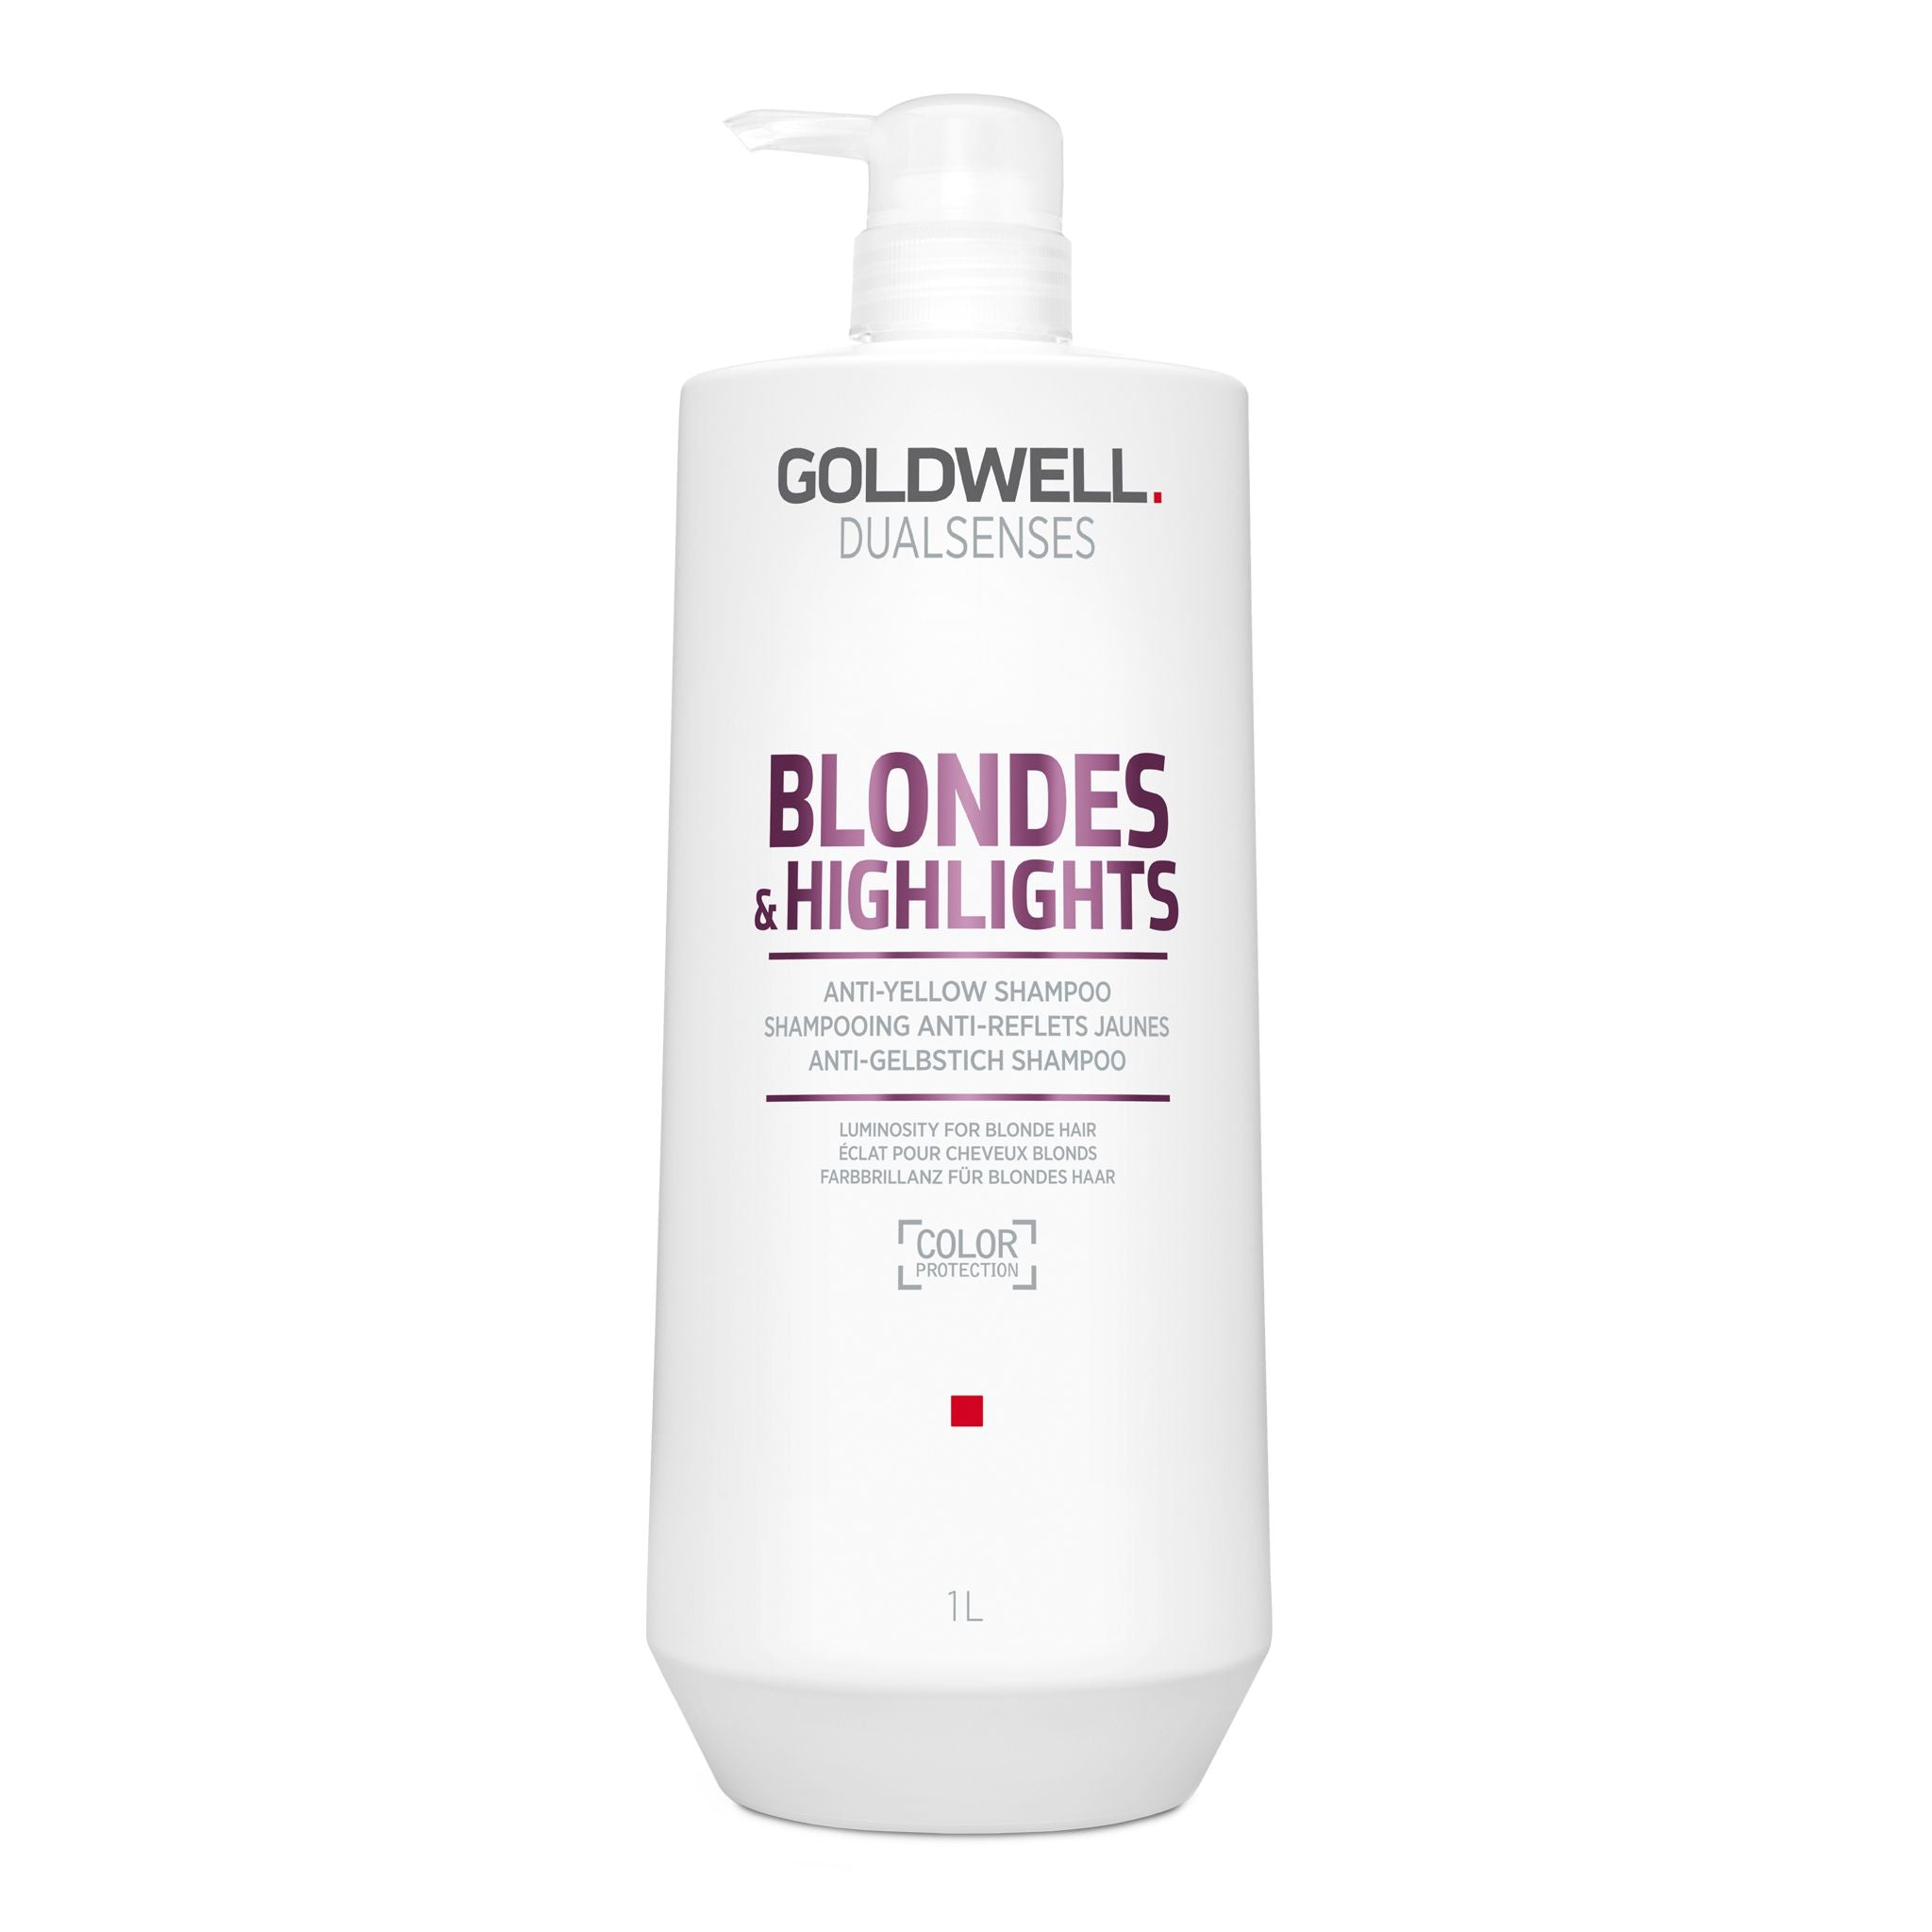 Blondes & Highlights Shampoo